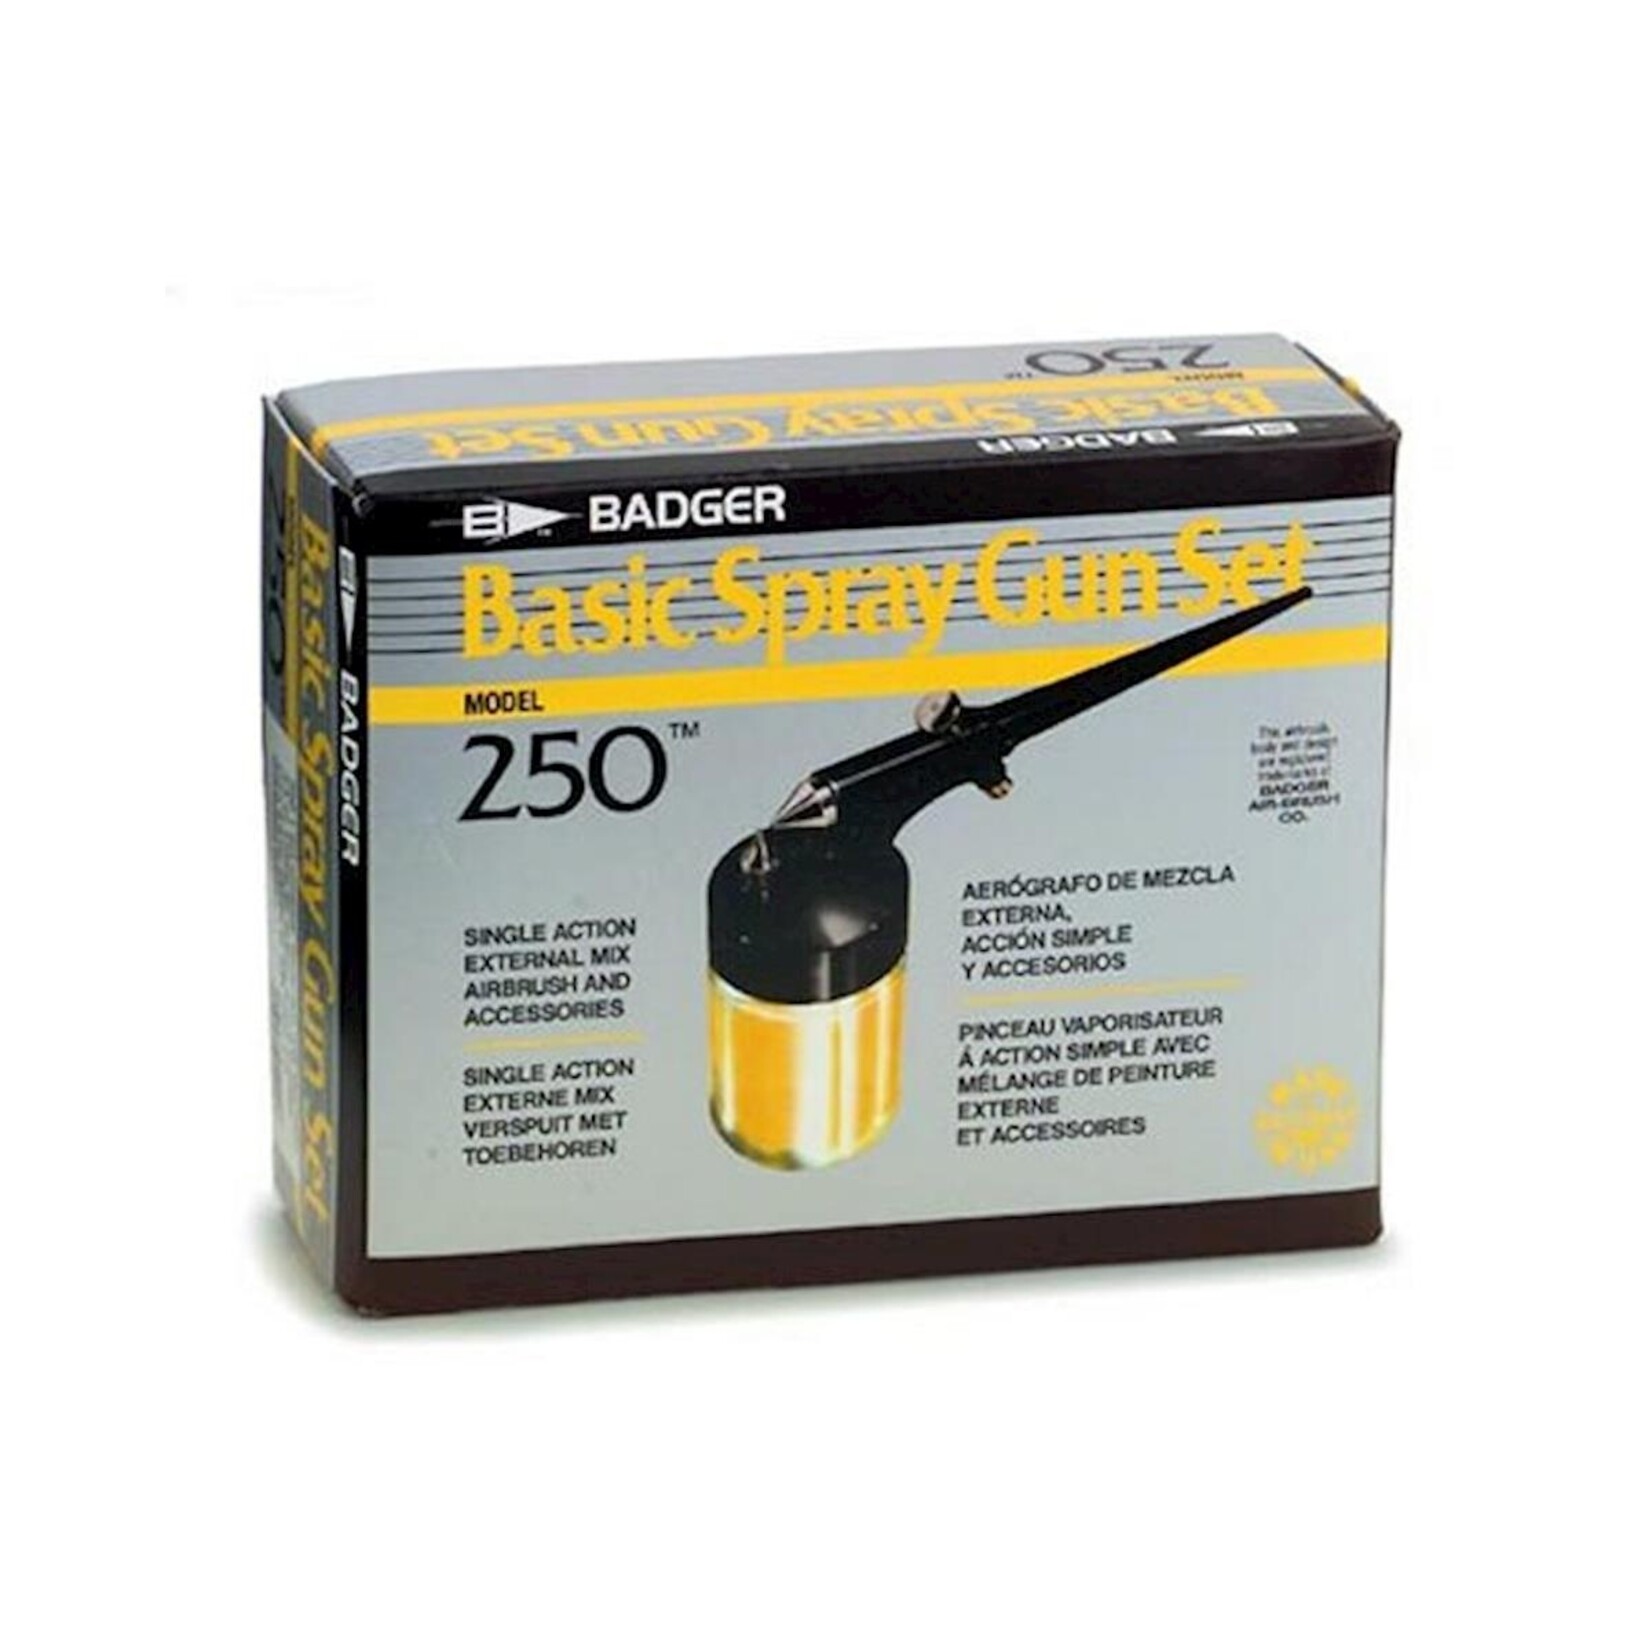 Badger Air-brush Co. 250 Spray Gun Basic Set #250-1 - Hobby Time RC